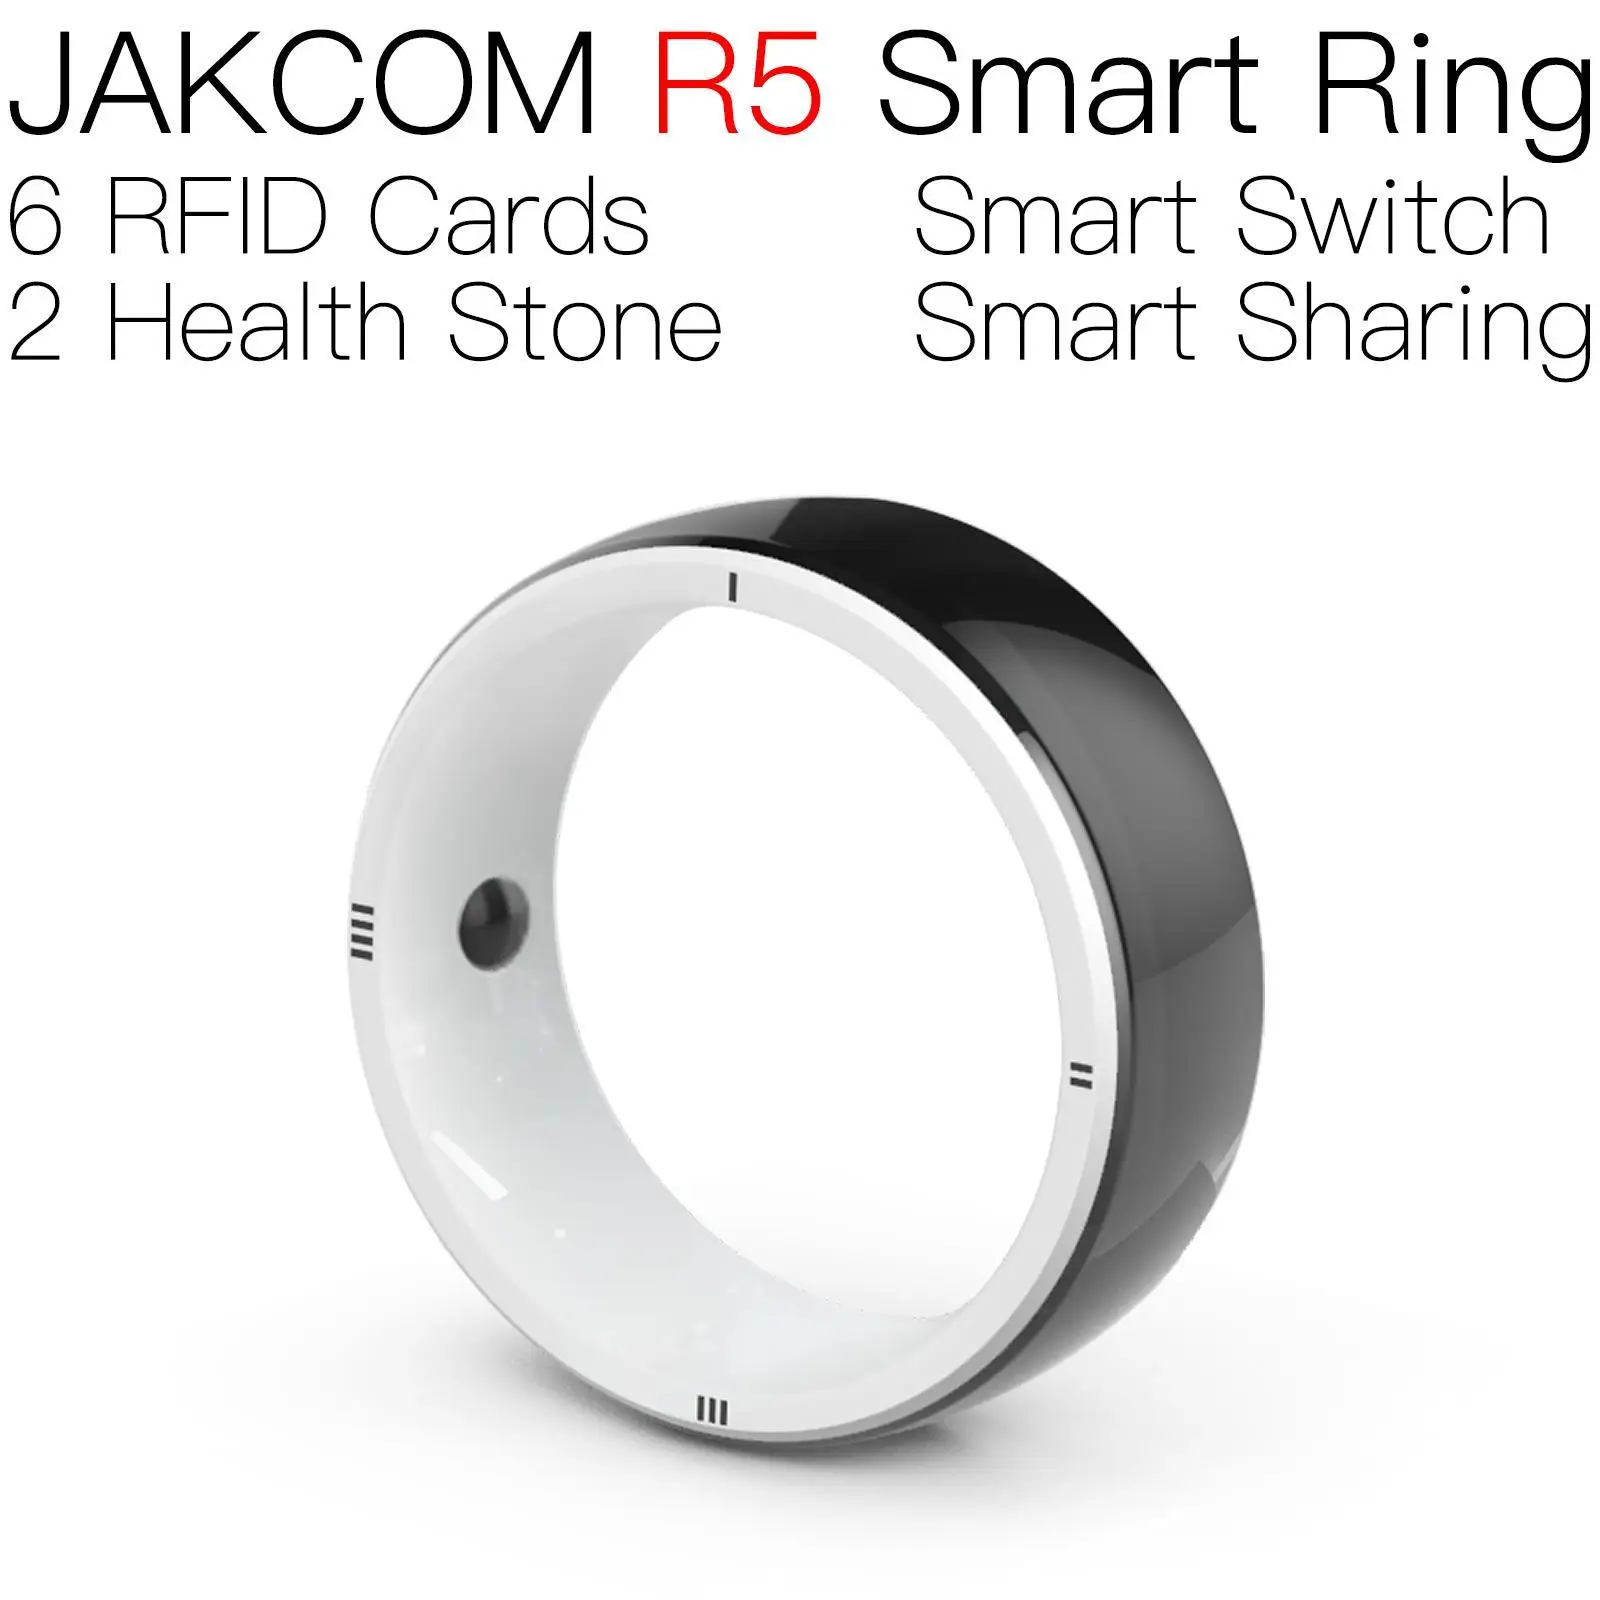 

JAKCOM R5 Smart Ring Match to uid changeable ic rfid tags 125khz clear sticker key pg103 tag smart nfc nail flashing uhf 6c 6